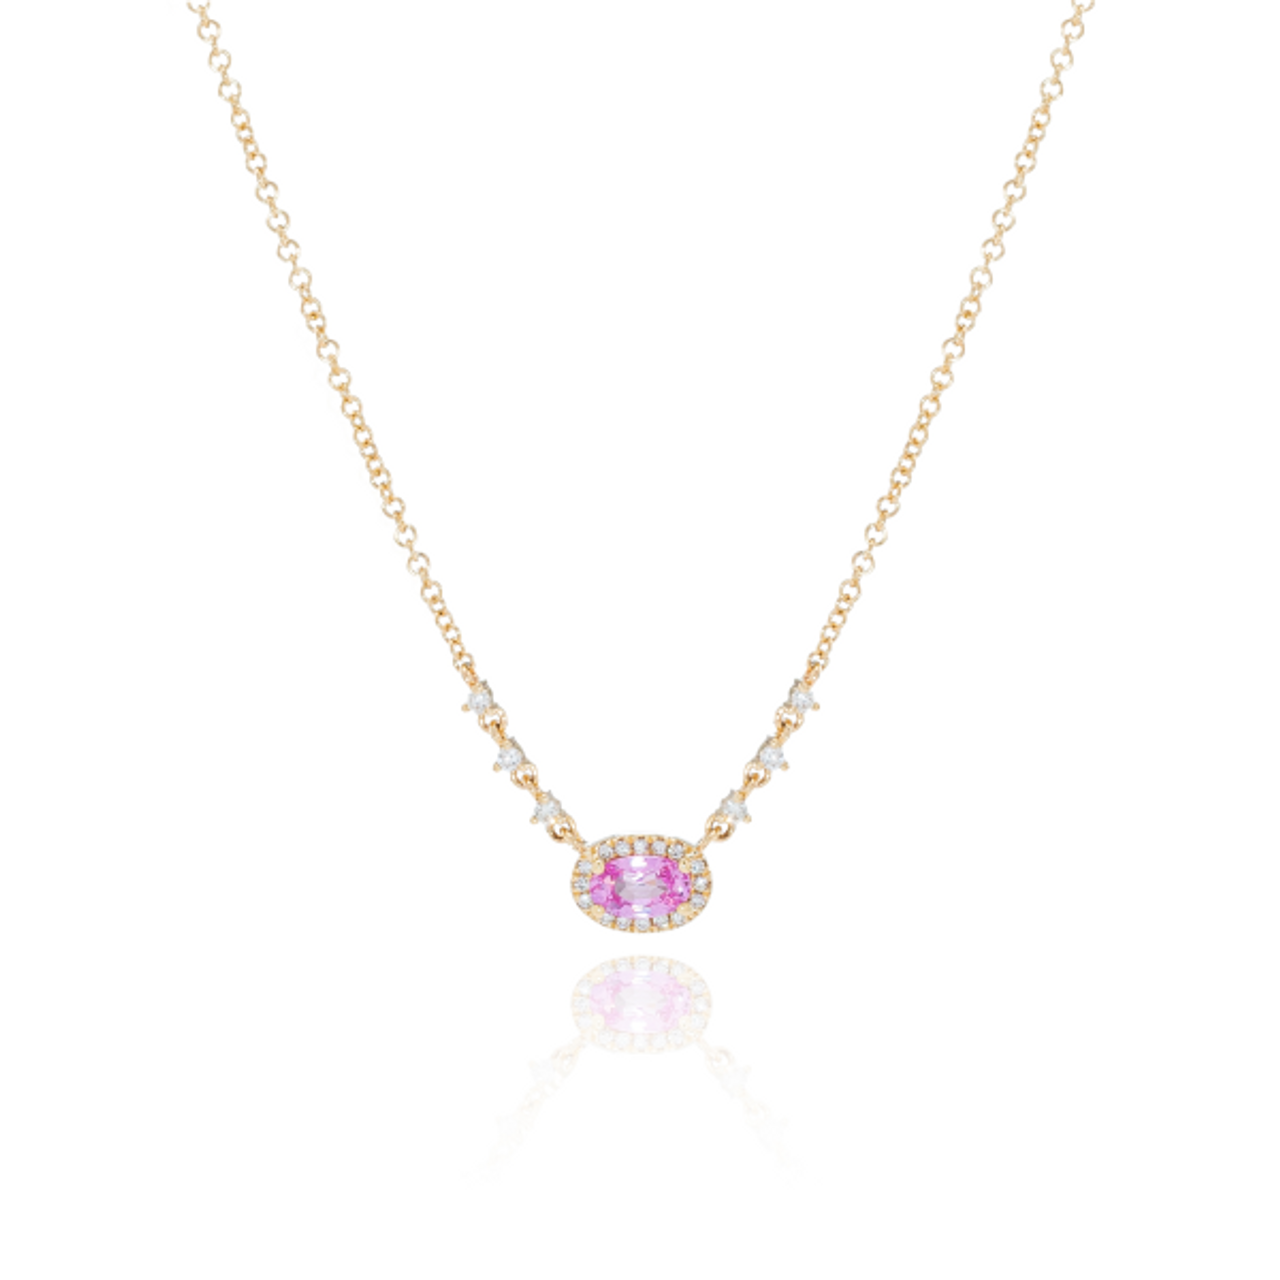 oval pink sapphire pendant